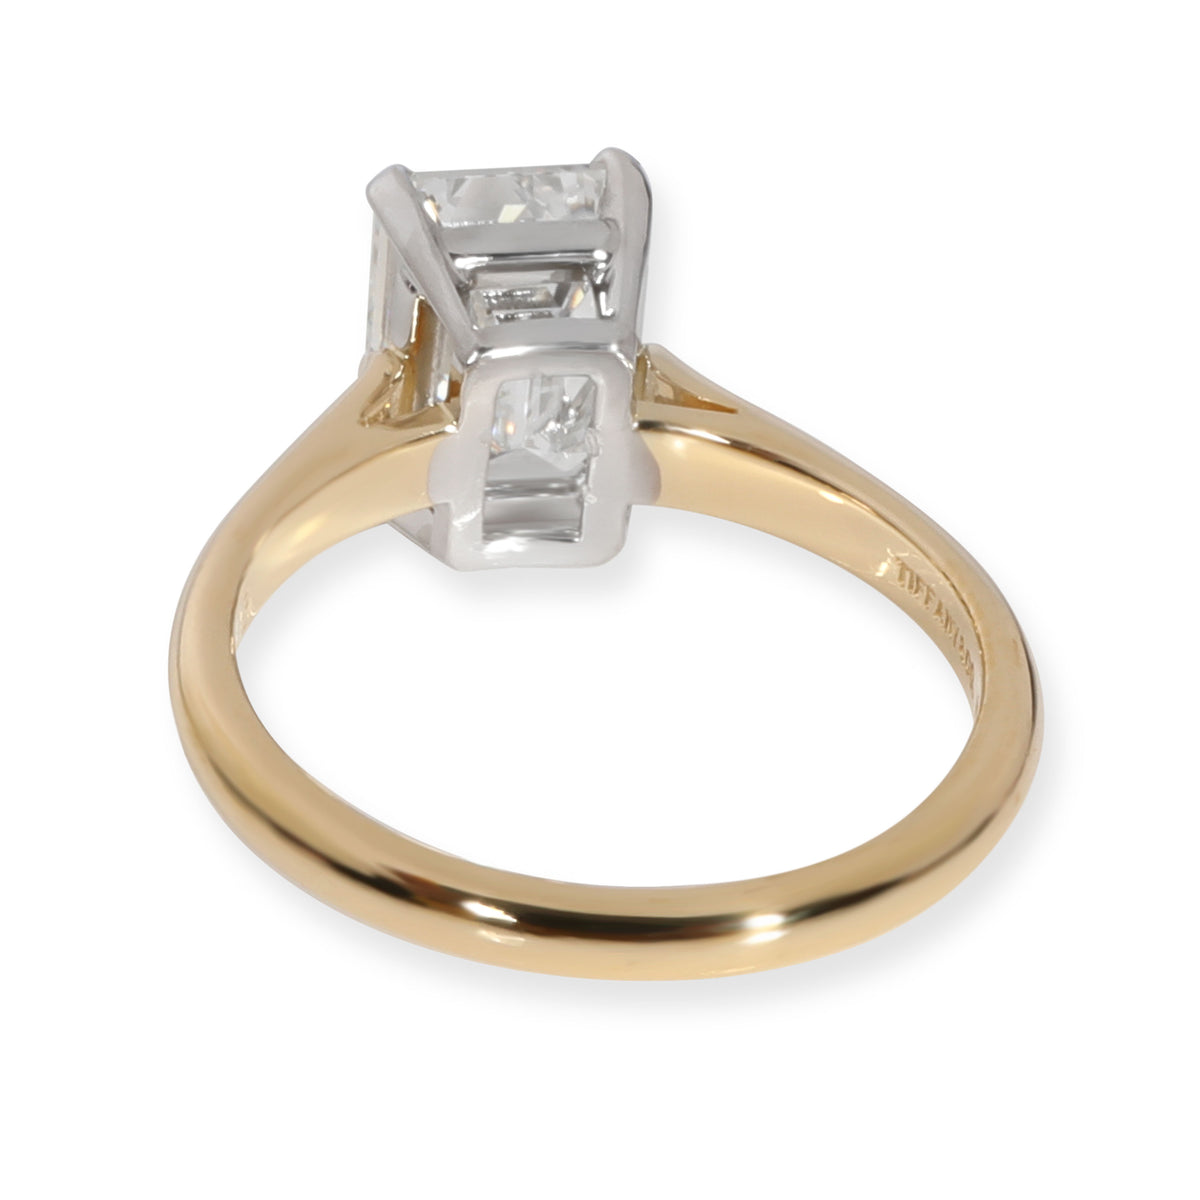 Tiffany & Co Emerald Diamond Solitaire Ring in 18K Gold/Platinum F VVS2 2.23 CTW